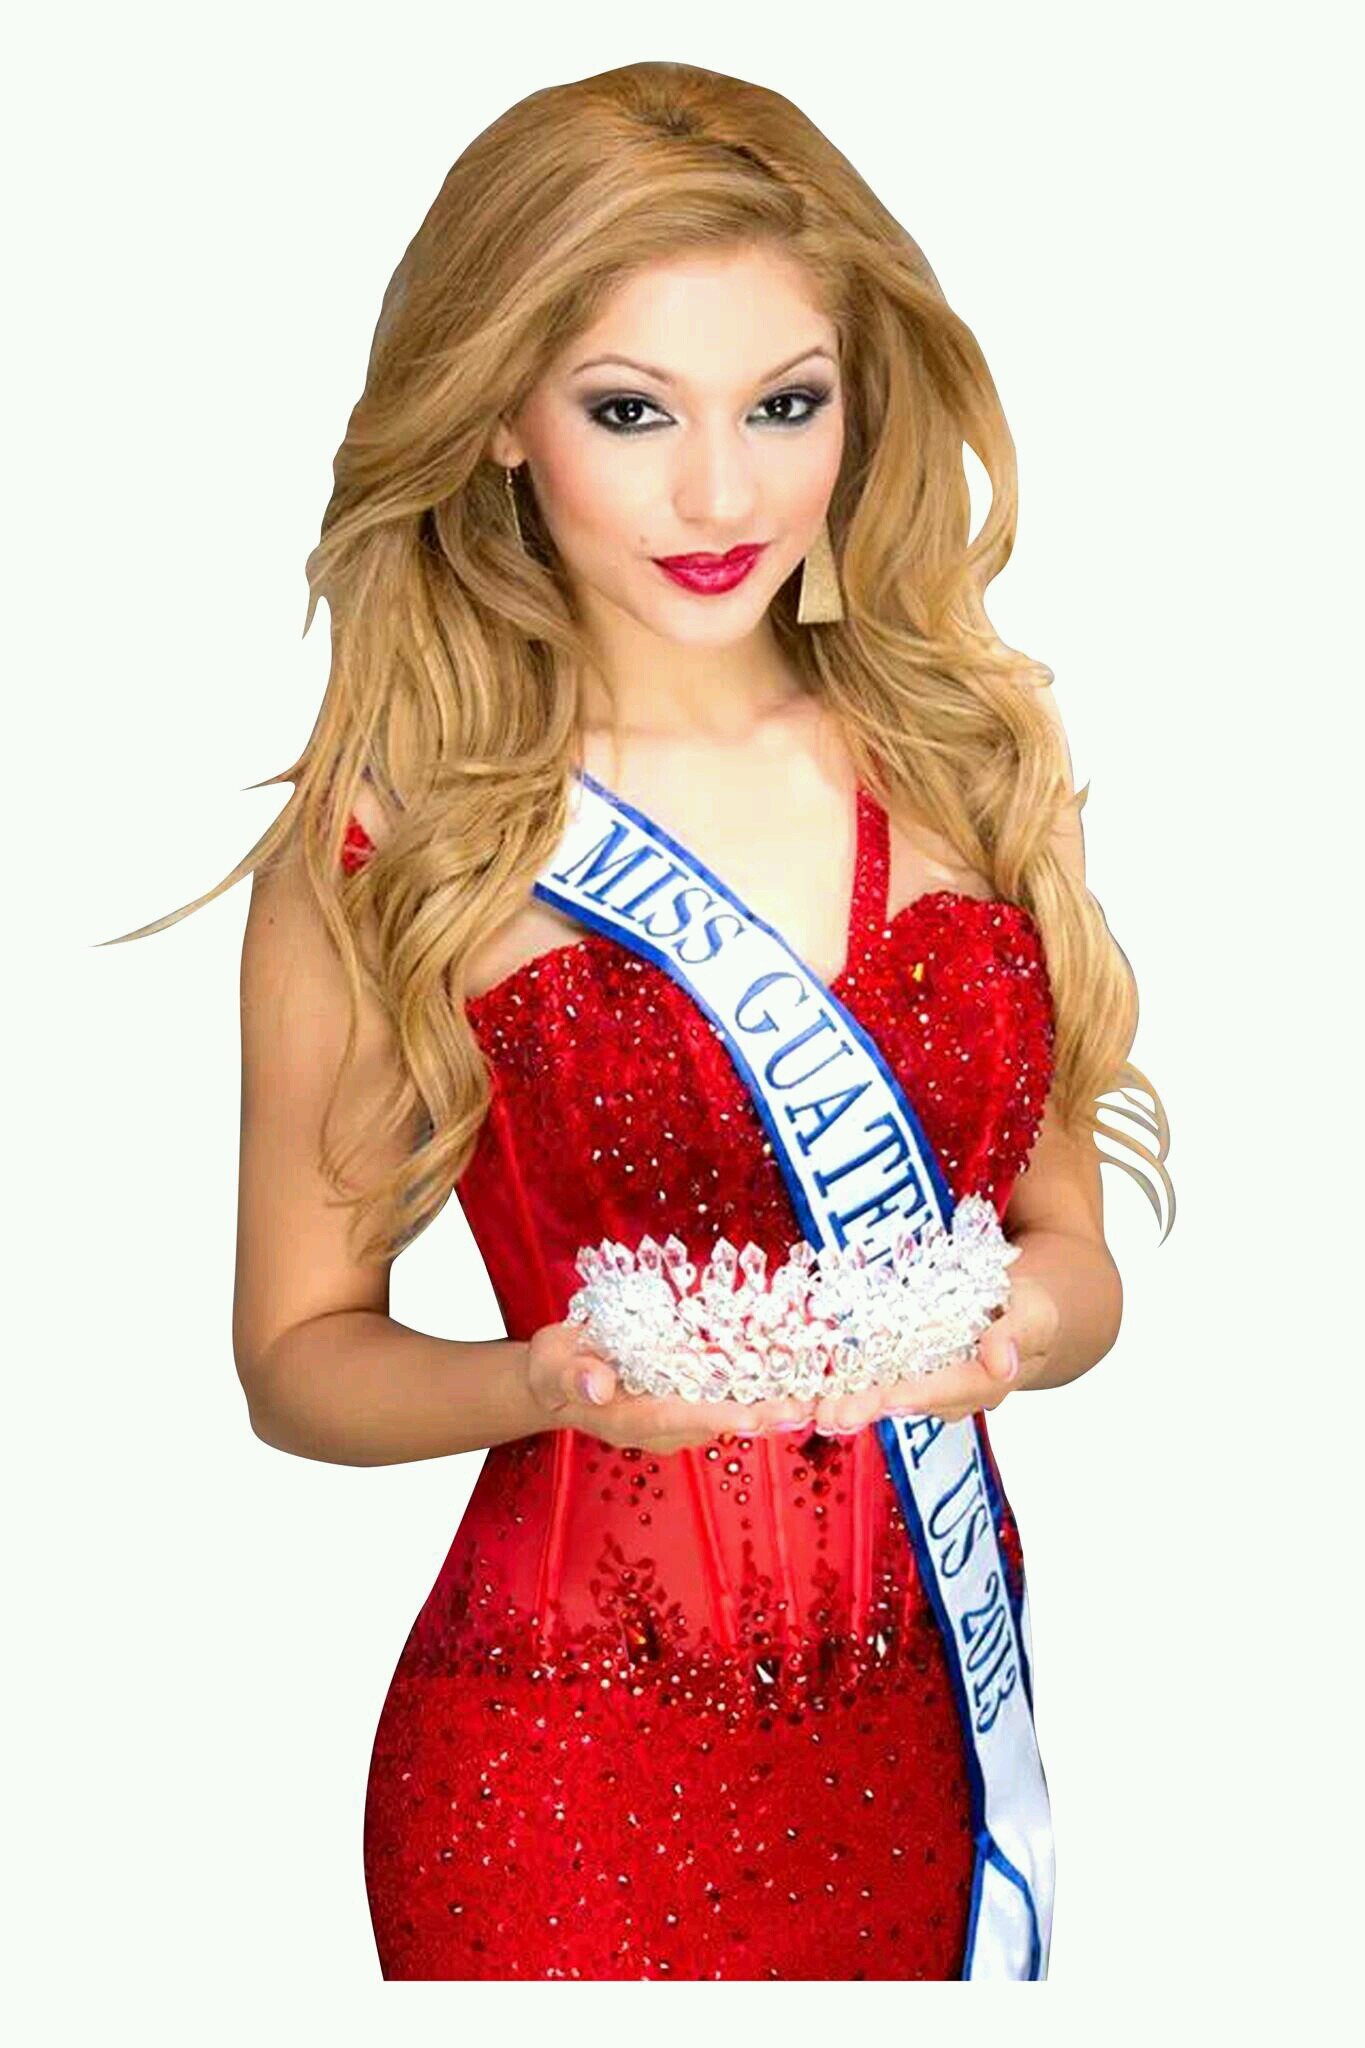 .
Miss Guatemala US Representing Guatemalan Beauty, Fashion and culture.